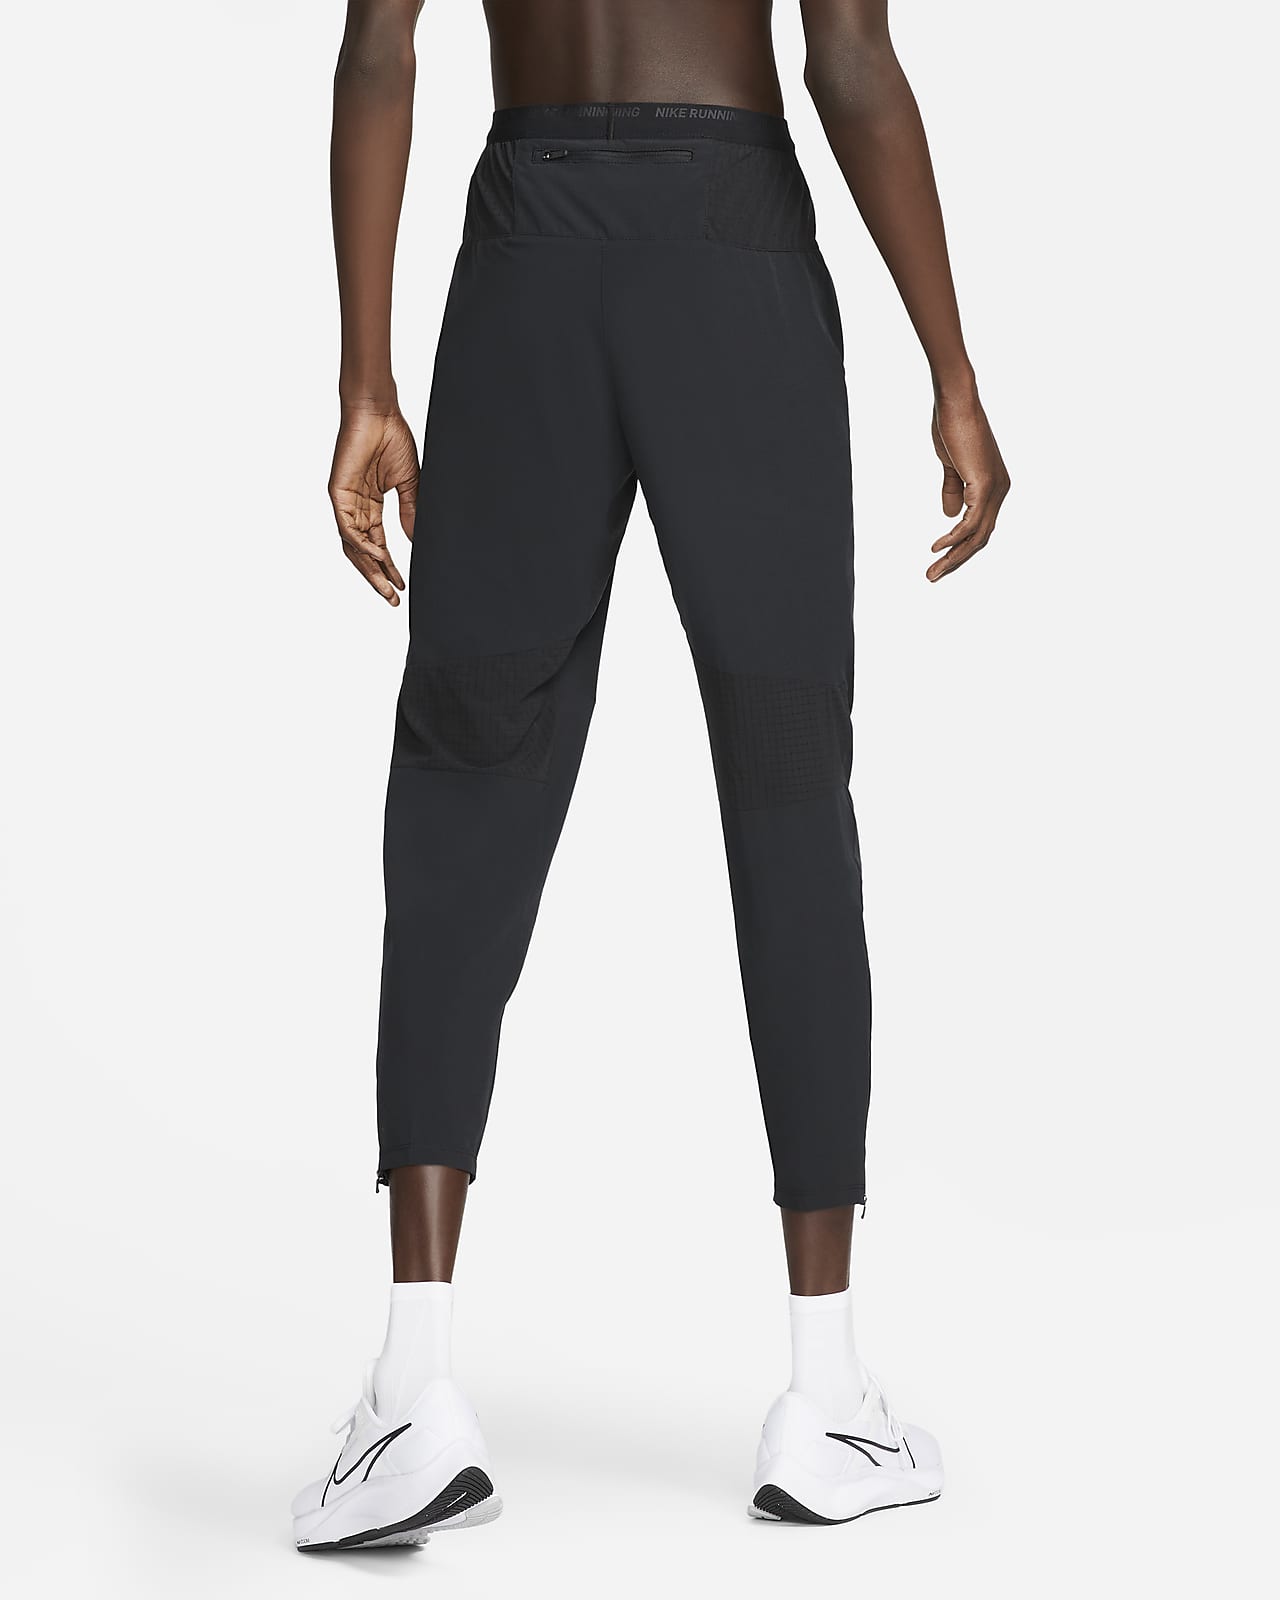 Nike Phenom Elite Knit Running Gym Pants Men's Size Large Grey NEW